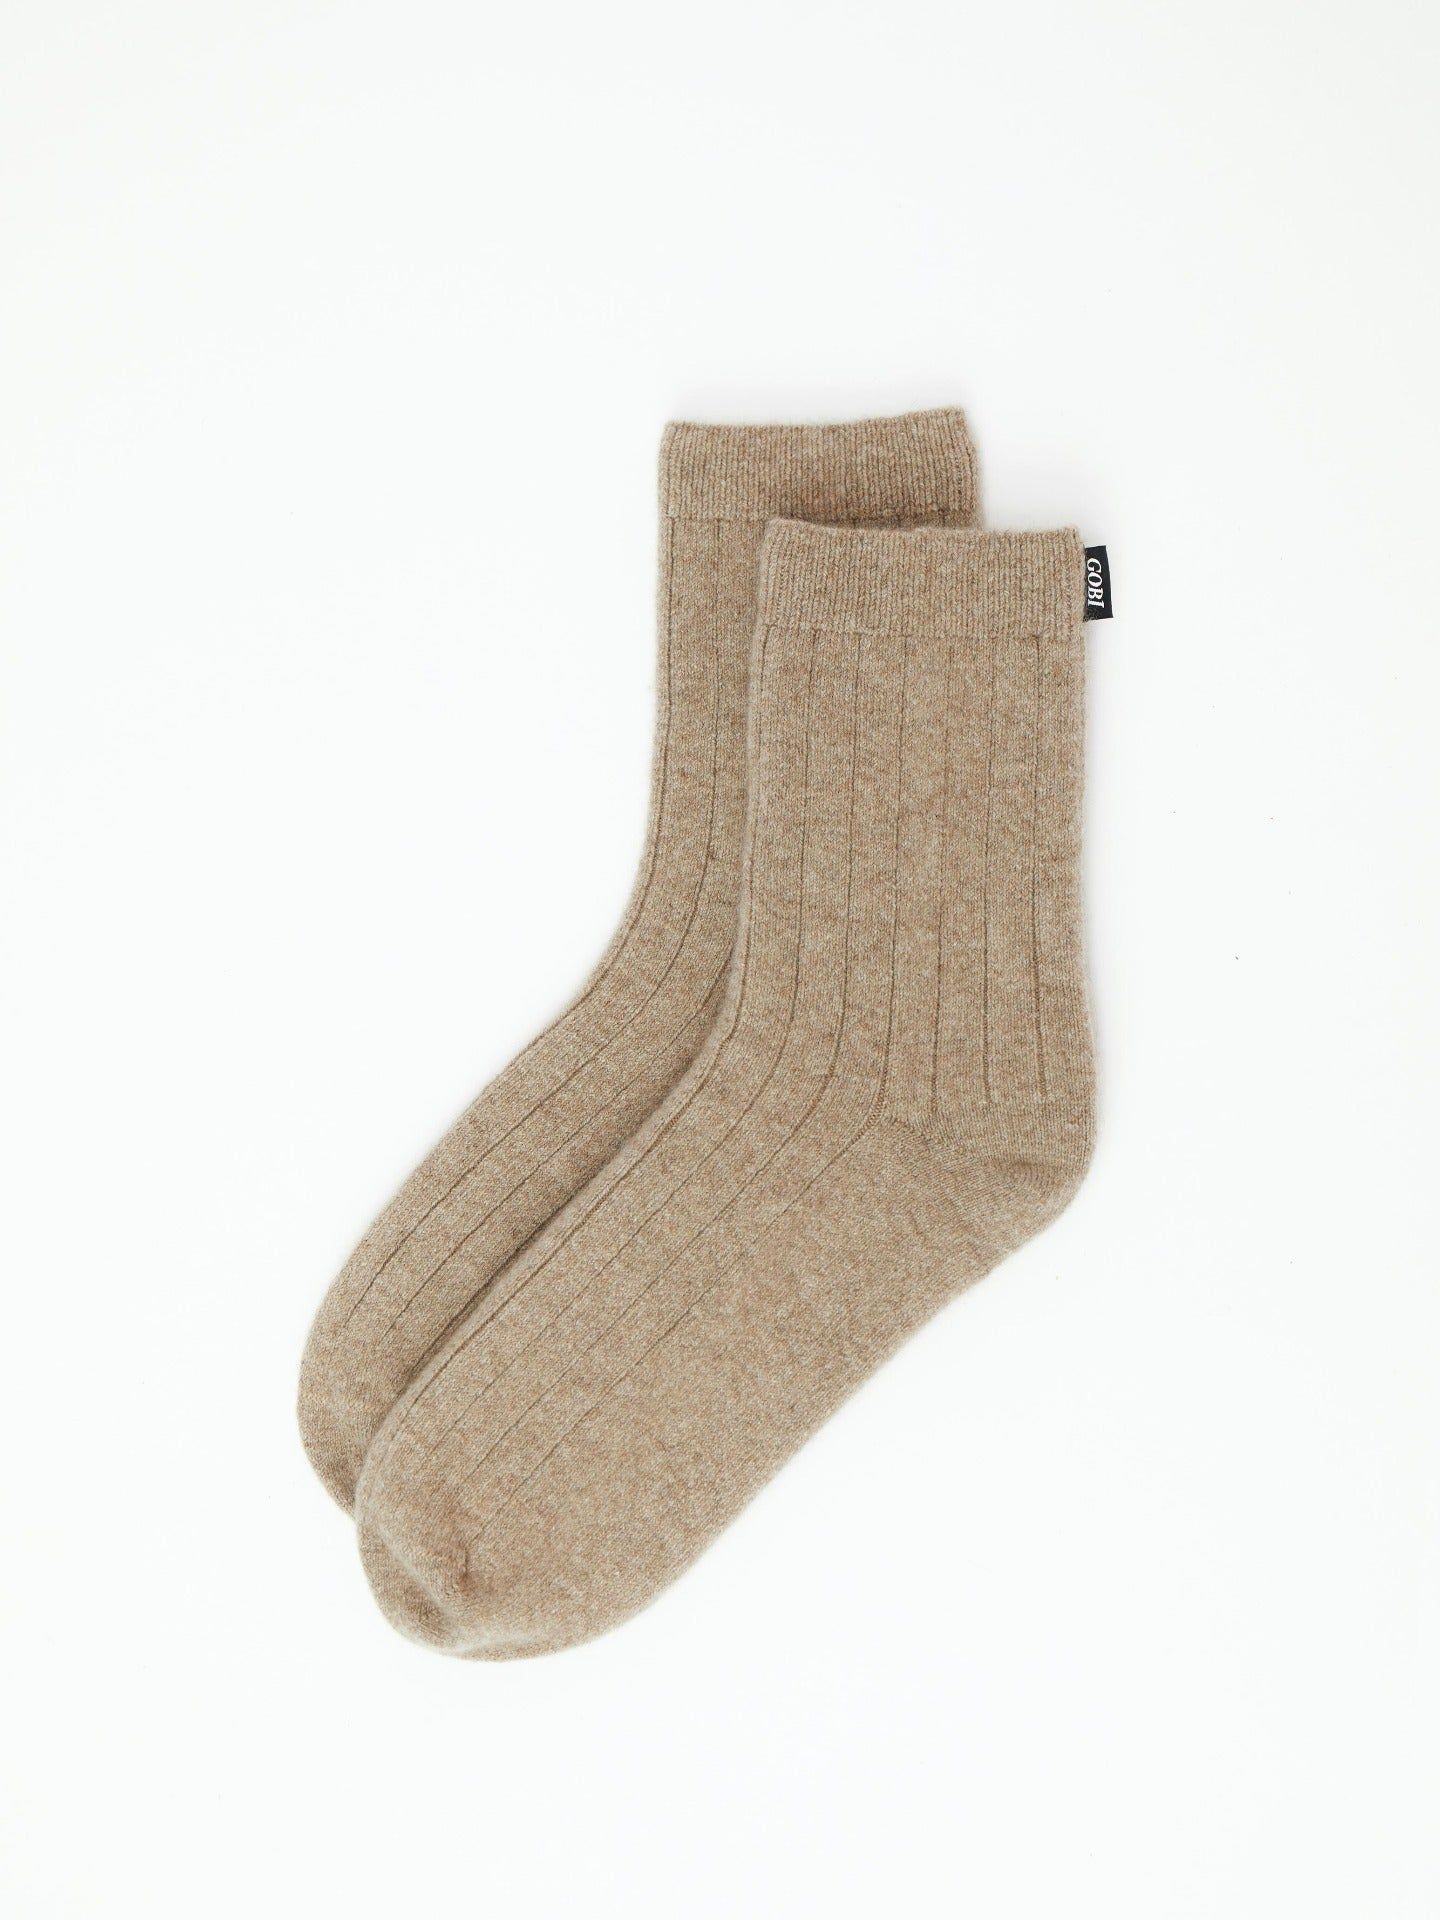 Organic Color Unisex Cashmere Trim Knit Bed Socks Taupe - Gobi Cashmere